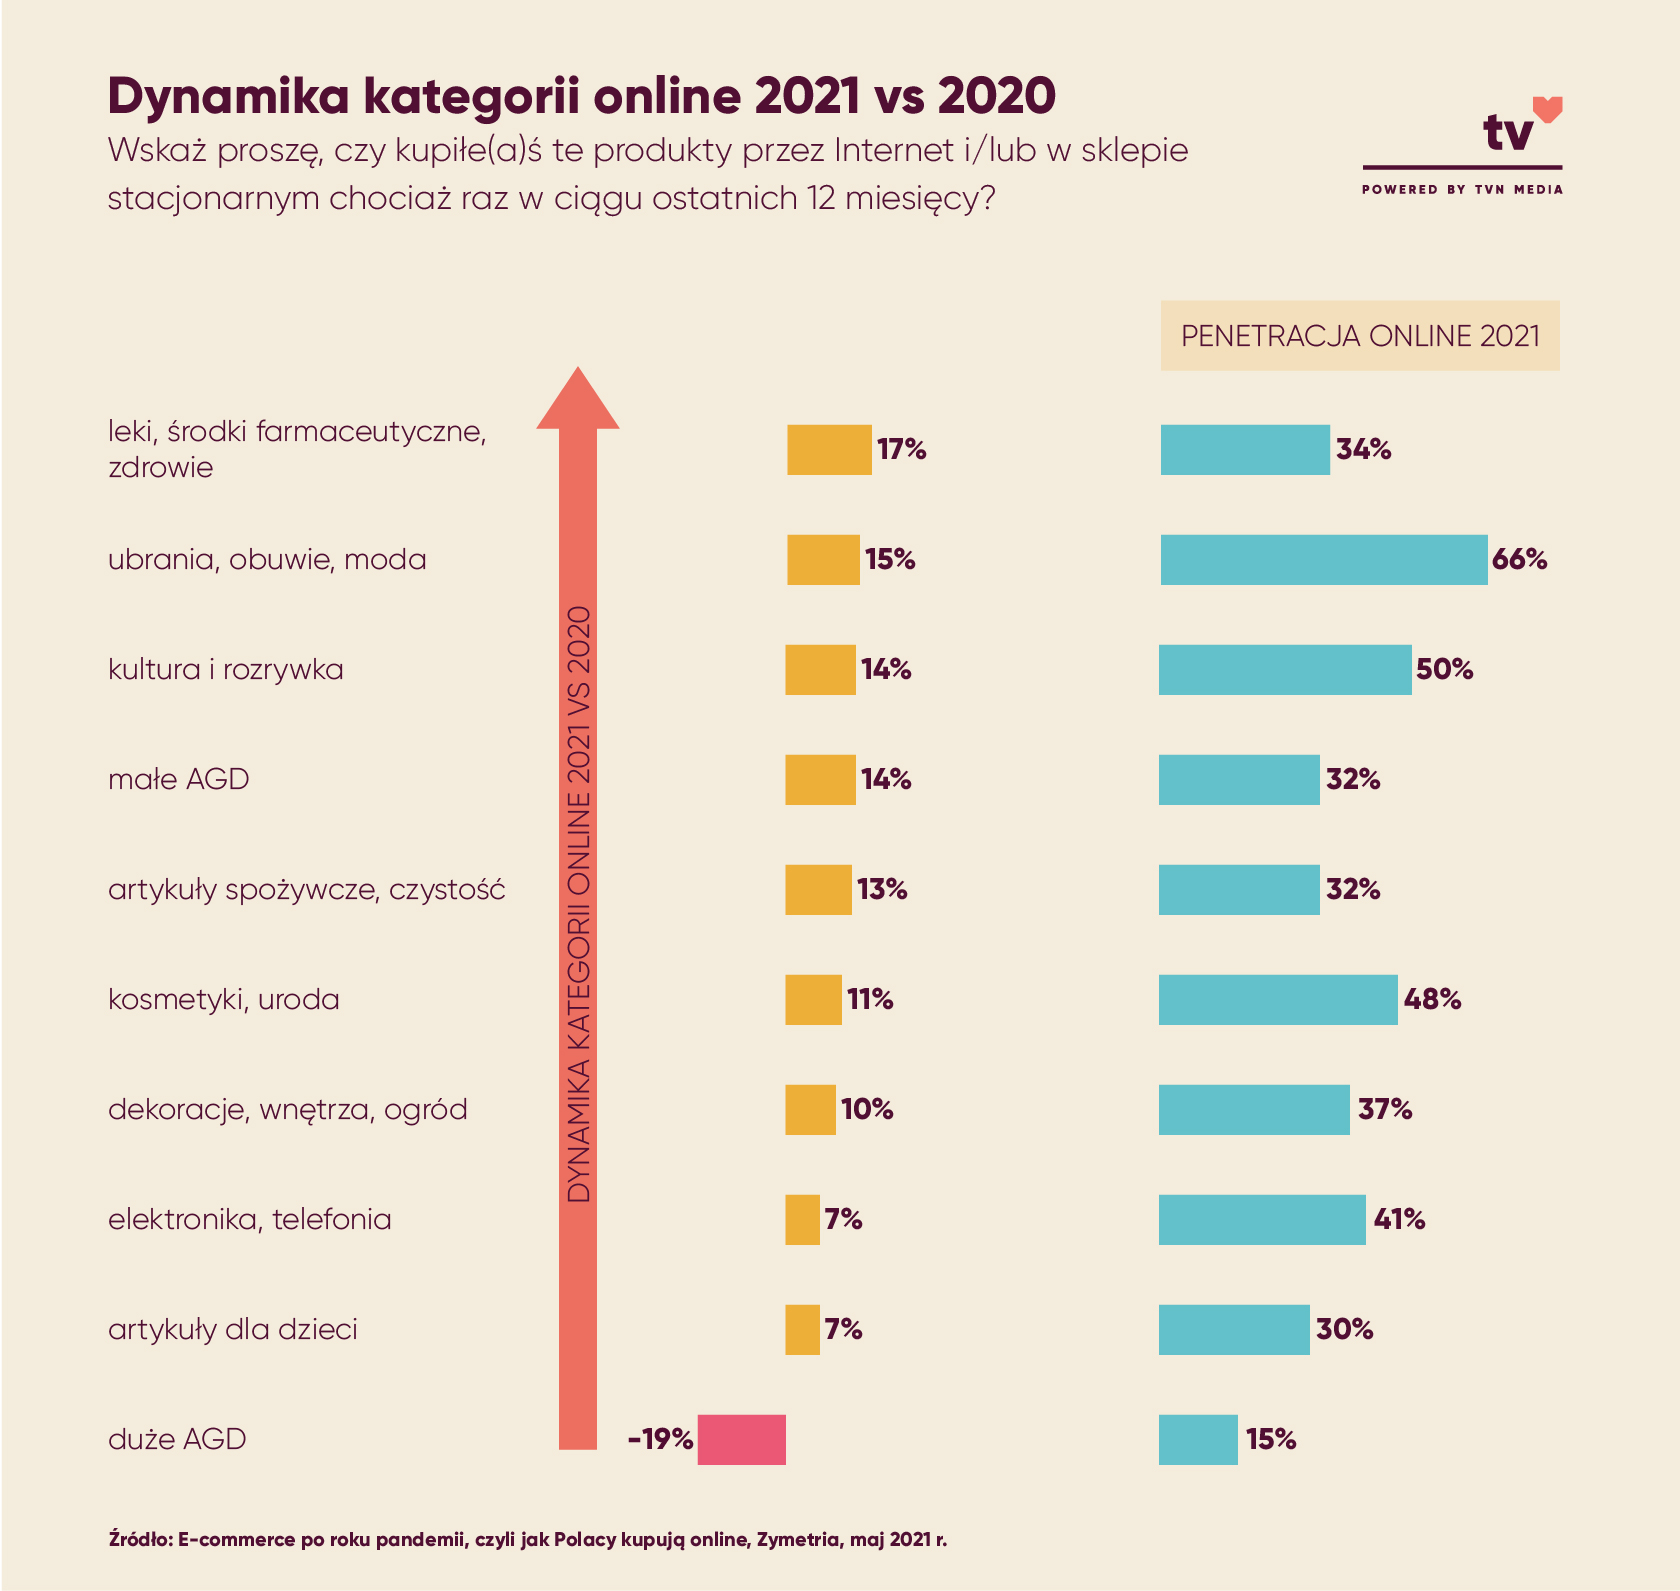 Dynamika kategorii online 2021 vs 2020